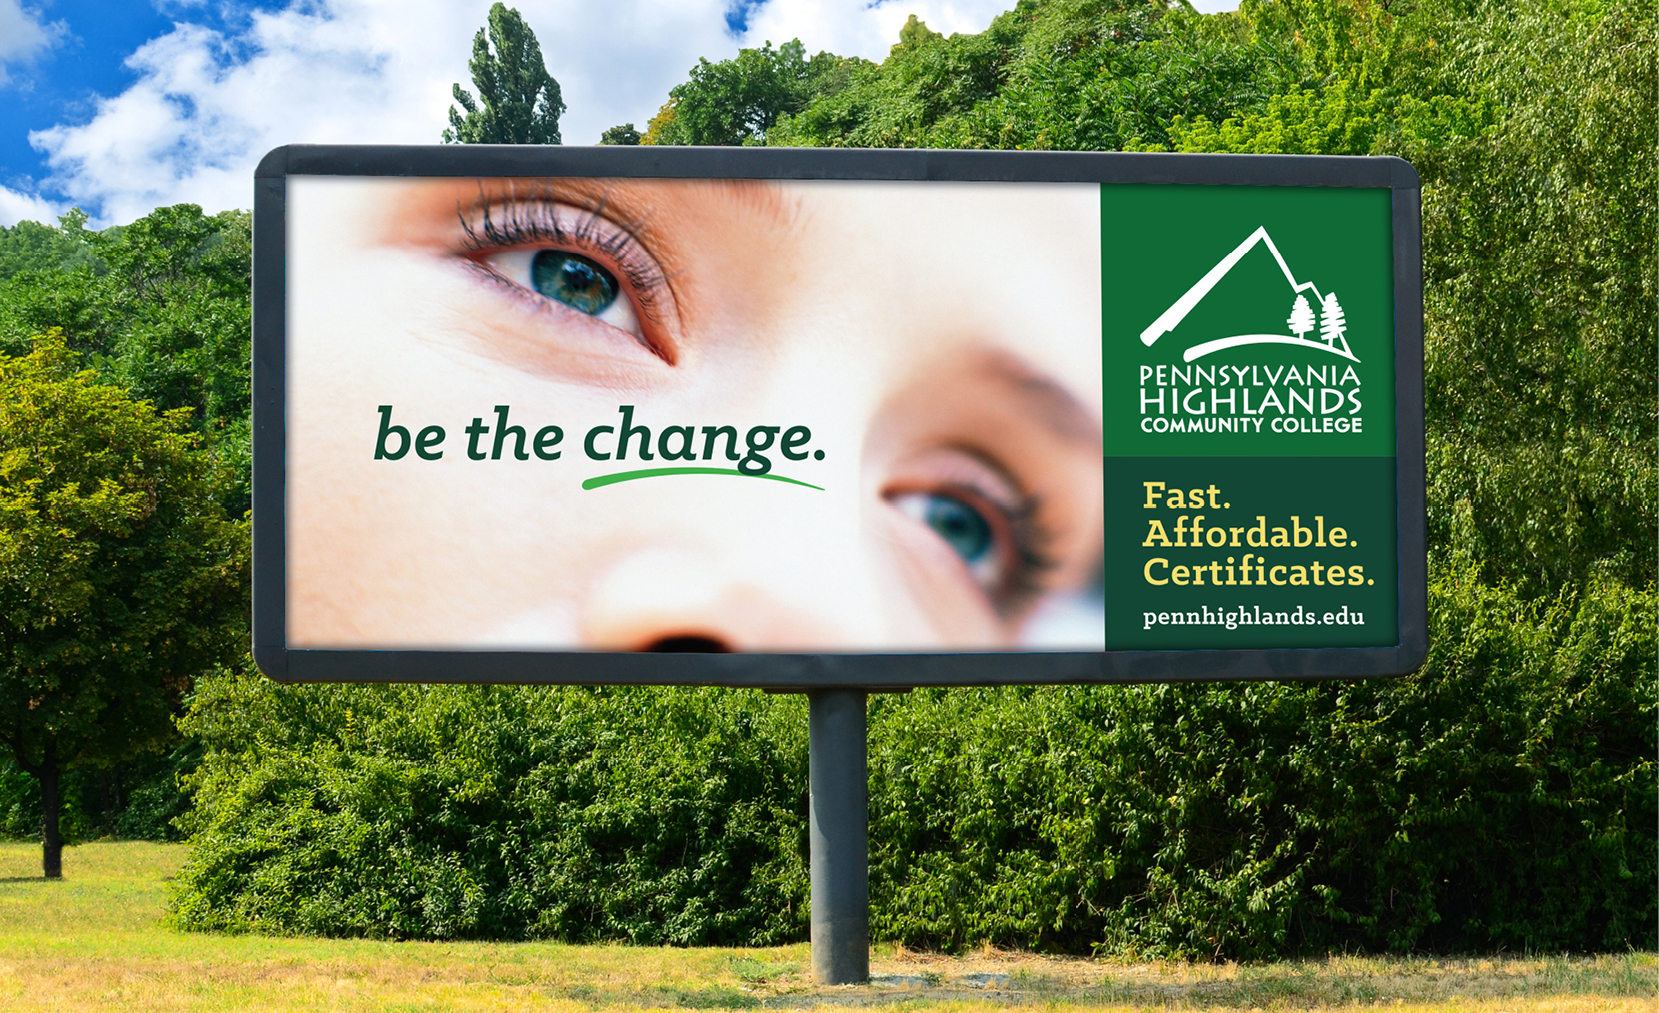 outdoor billboard for Penn Highlands